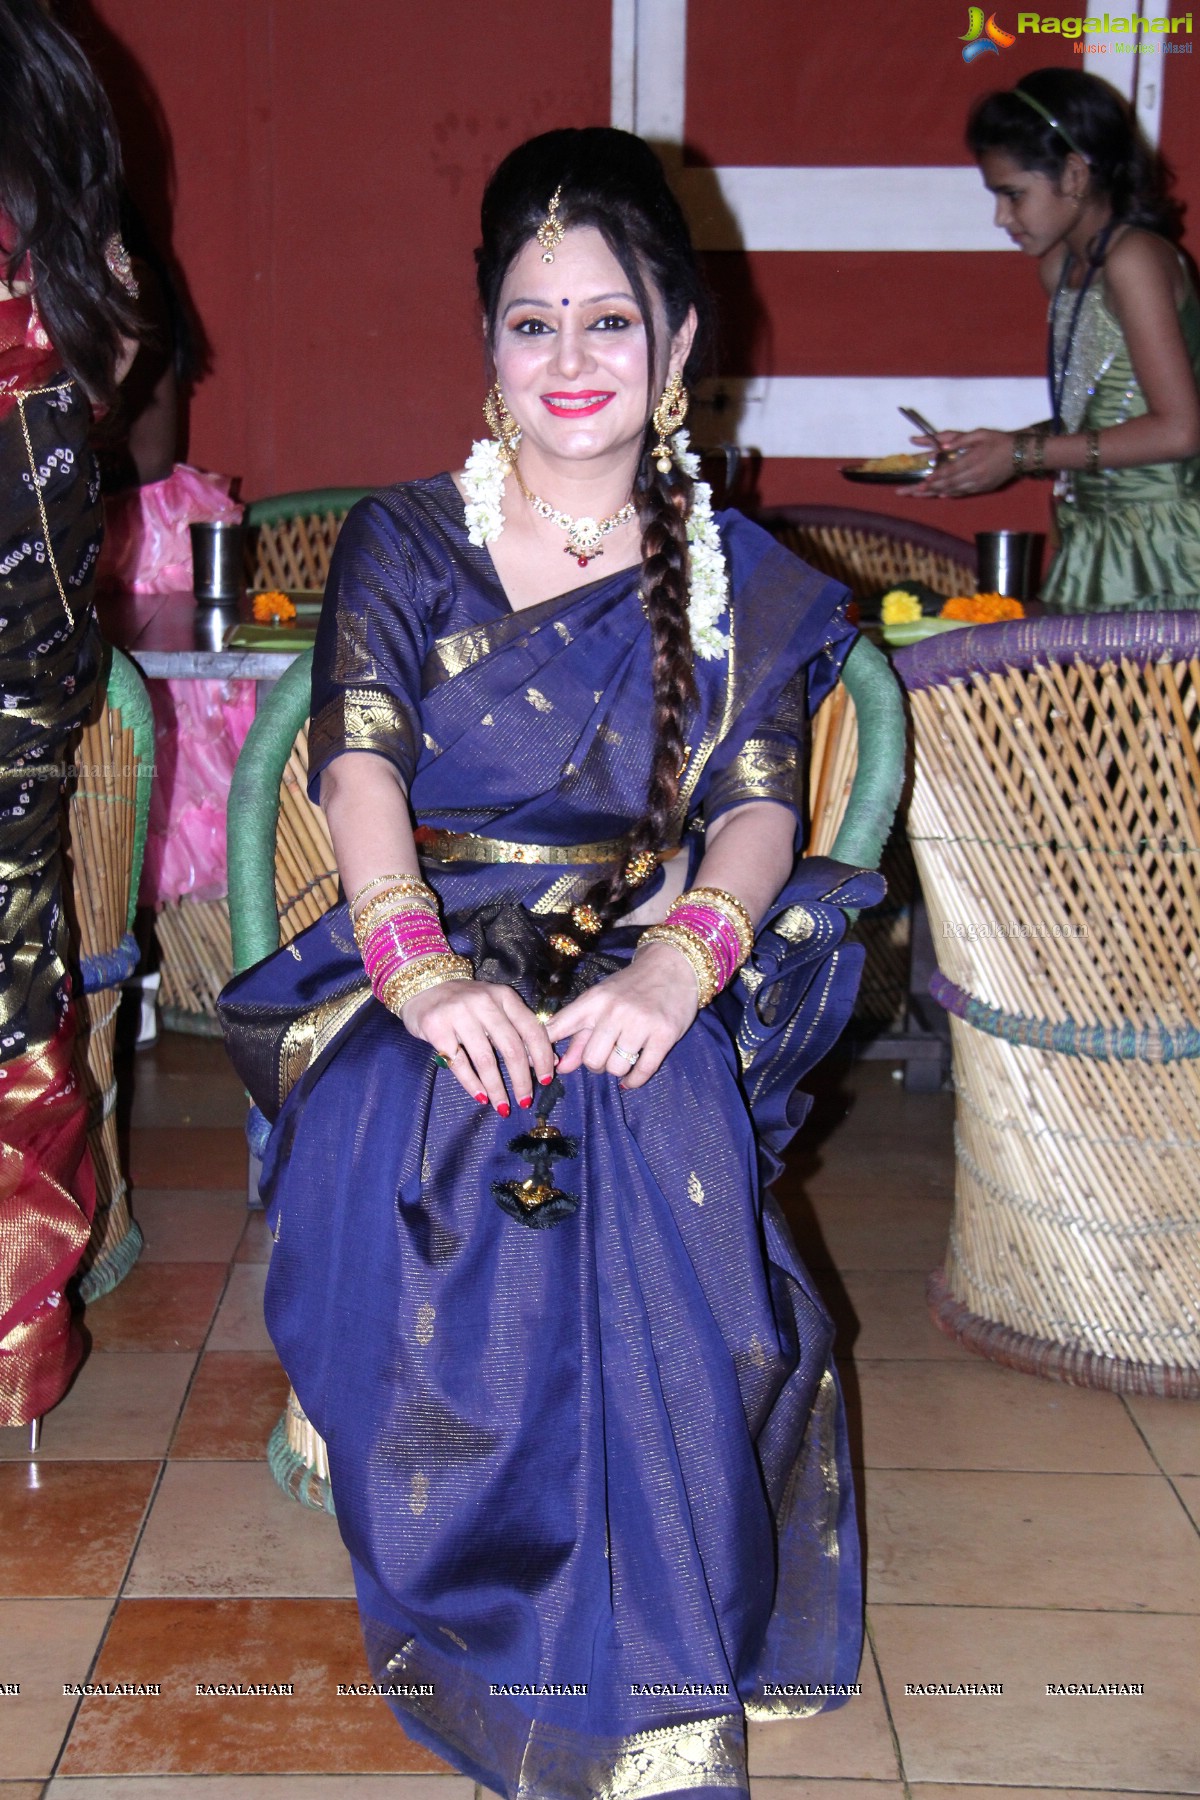 Femmis Ugadi Celebrations 2016 at The Village, Hyderabad